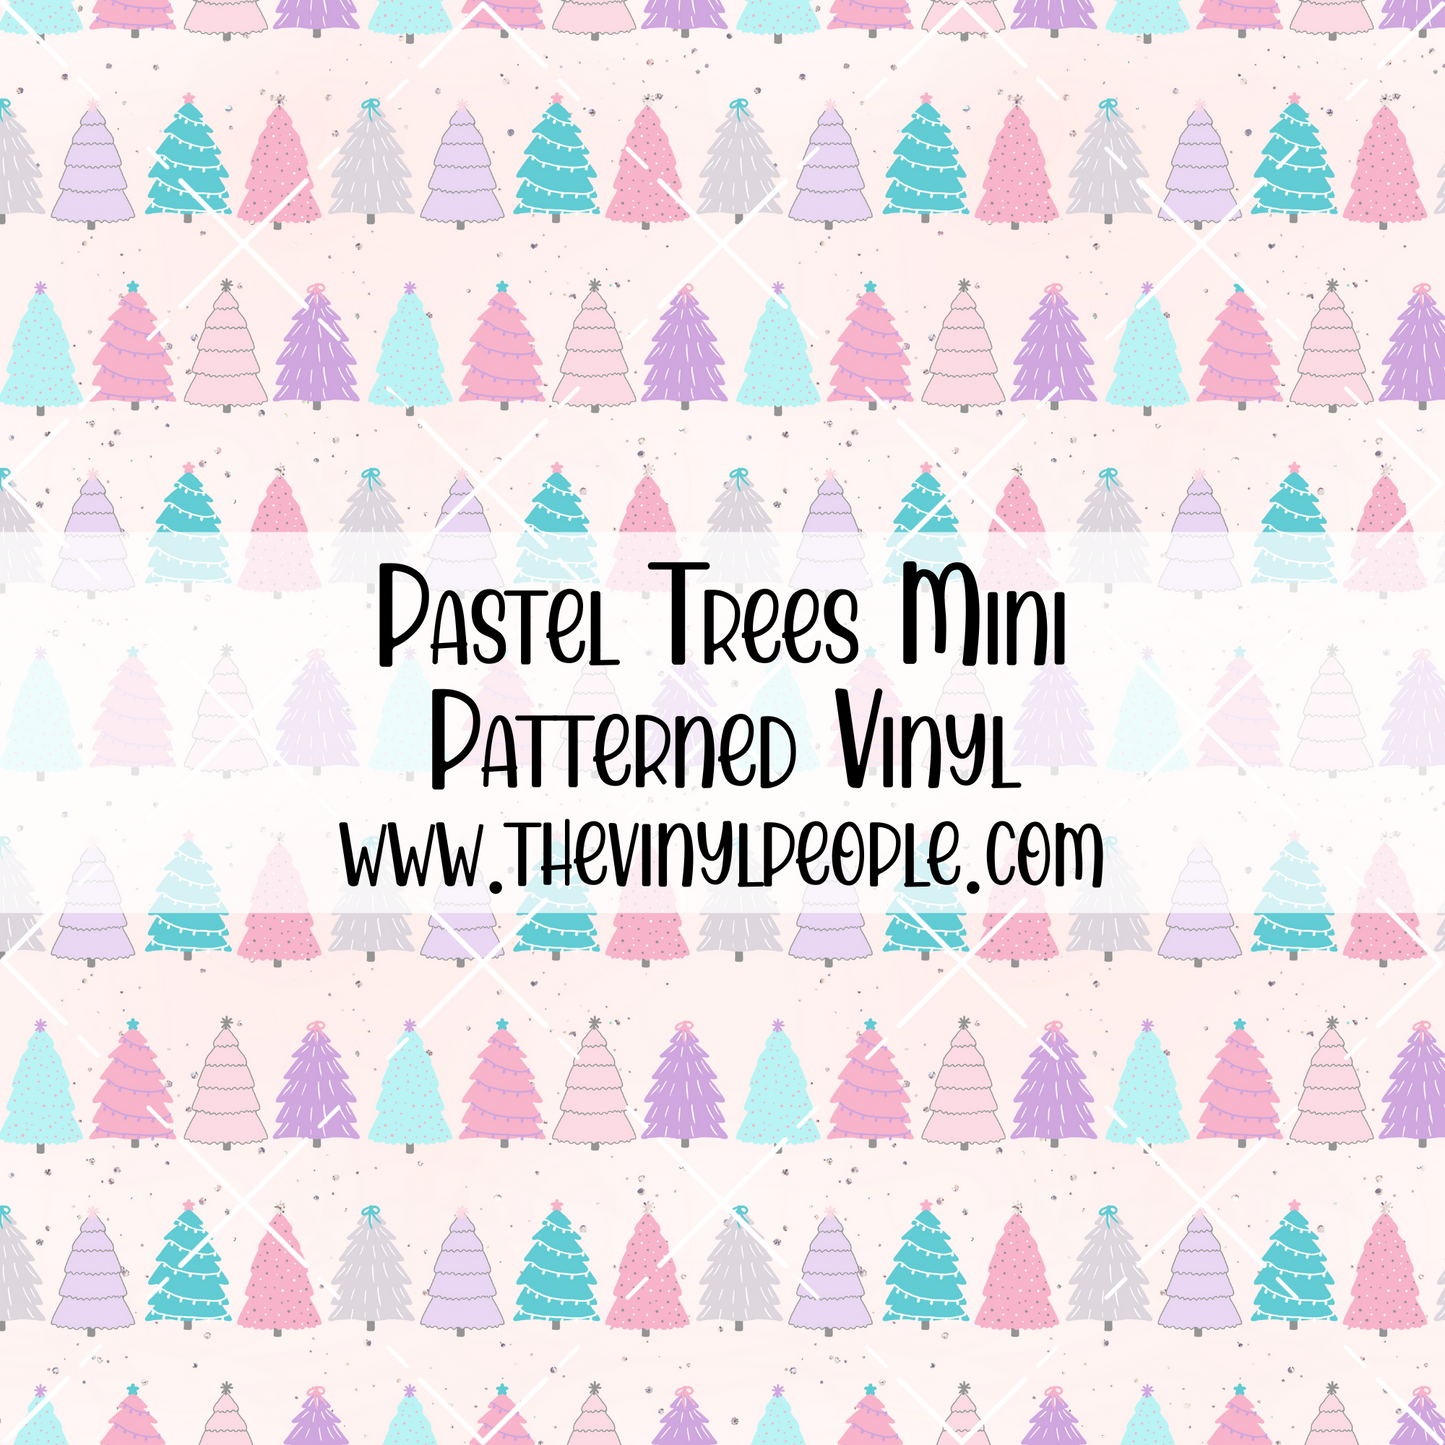 Pastel Trees Patterned Vinyl